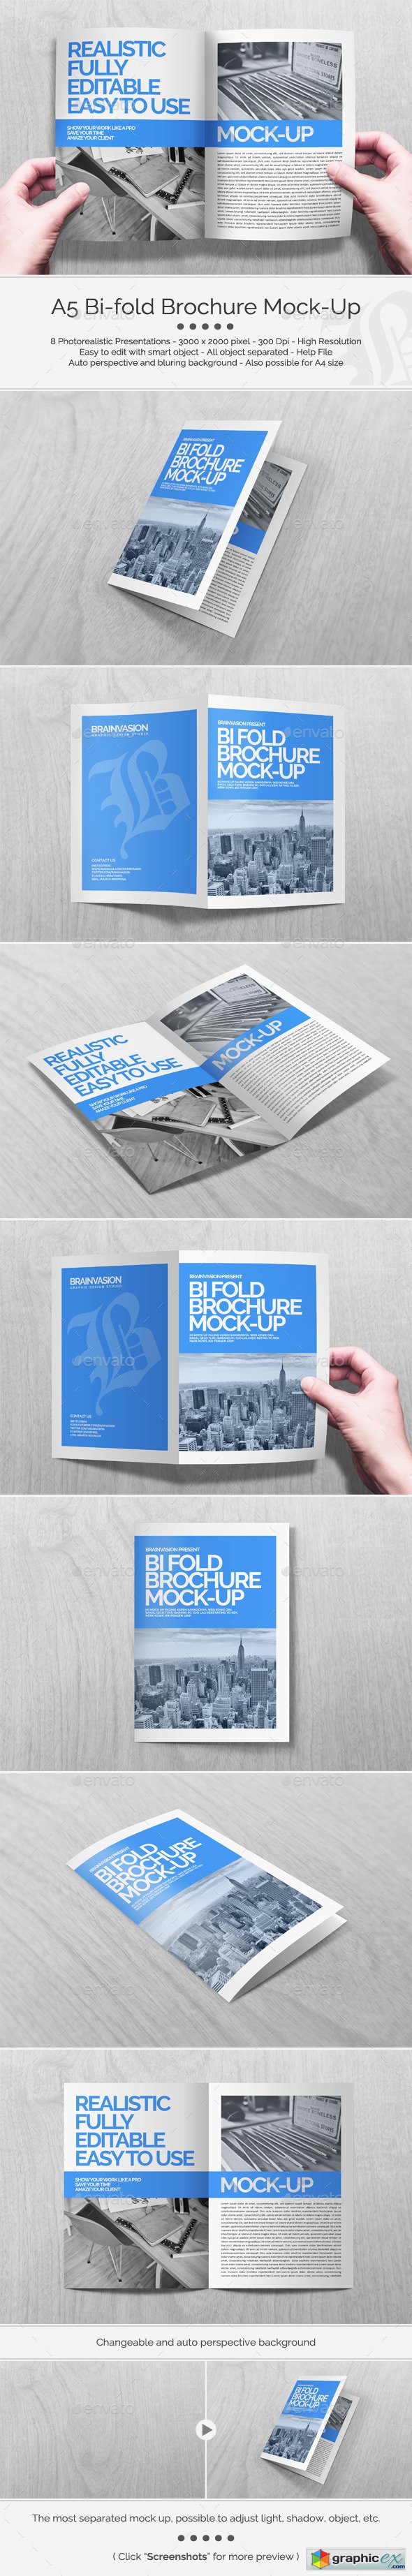 A5 Bi-fold Brochure Mock-Up Set